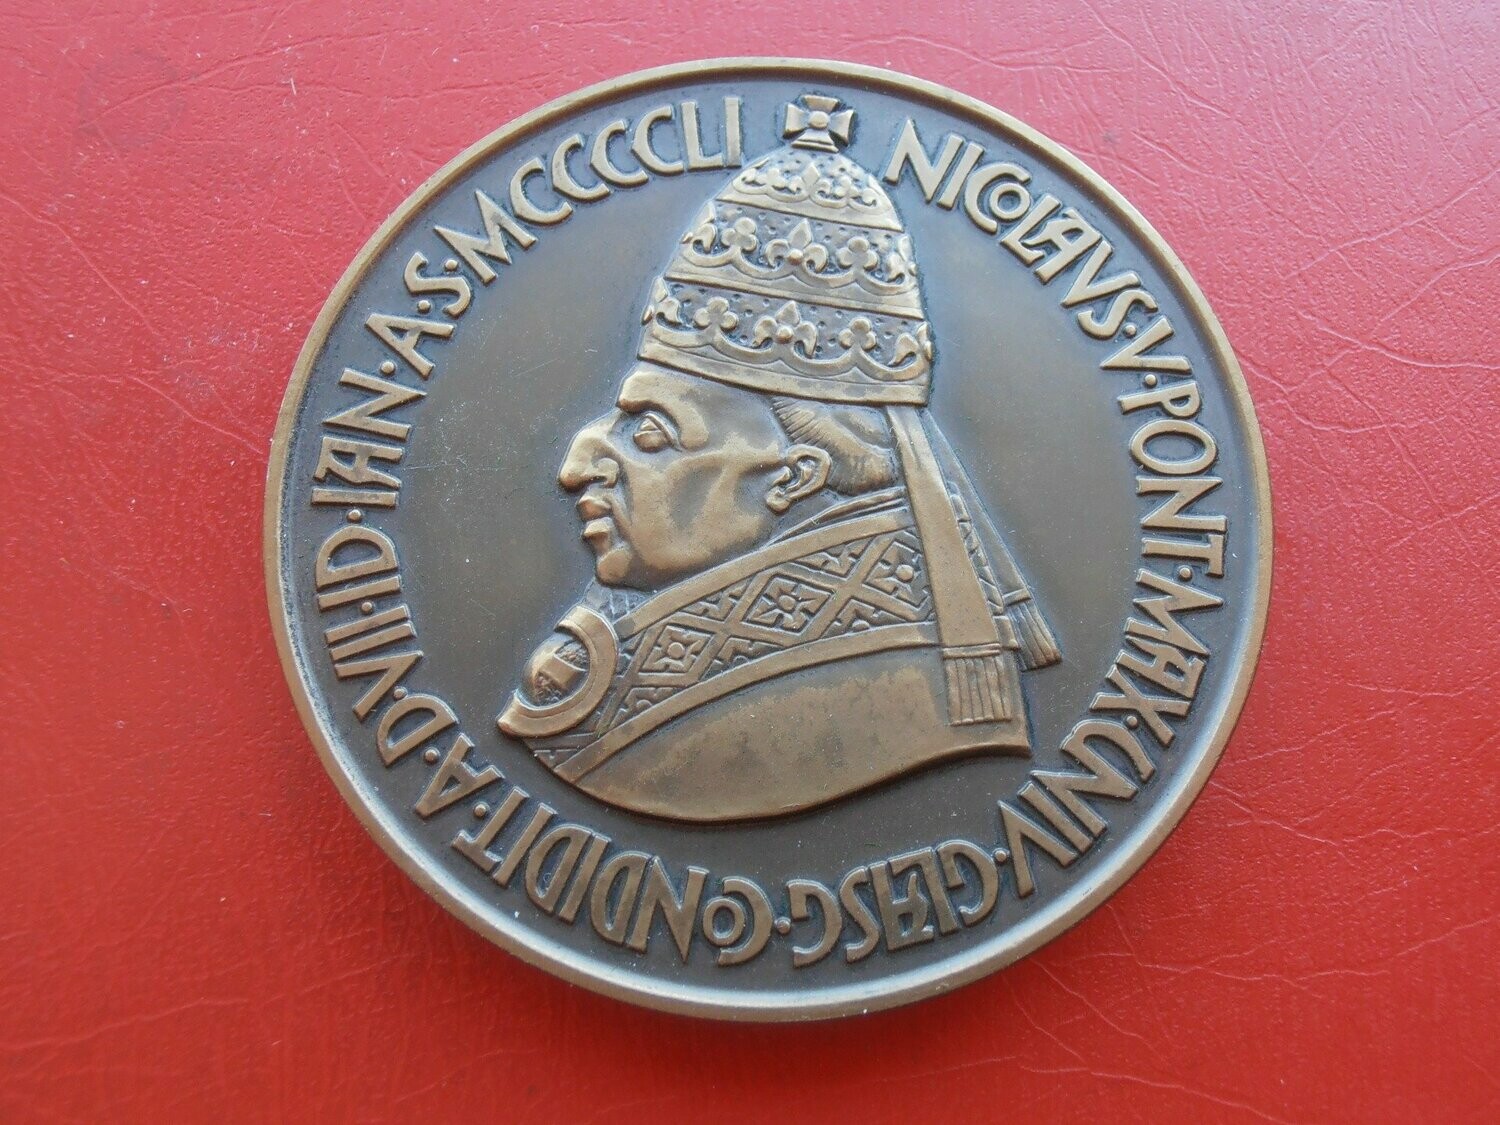 500th Anniversary Glasgow University Medal - 1951 Rare